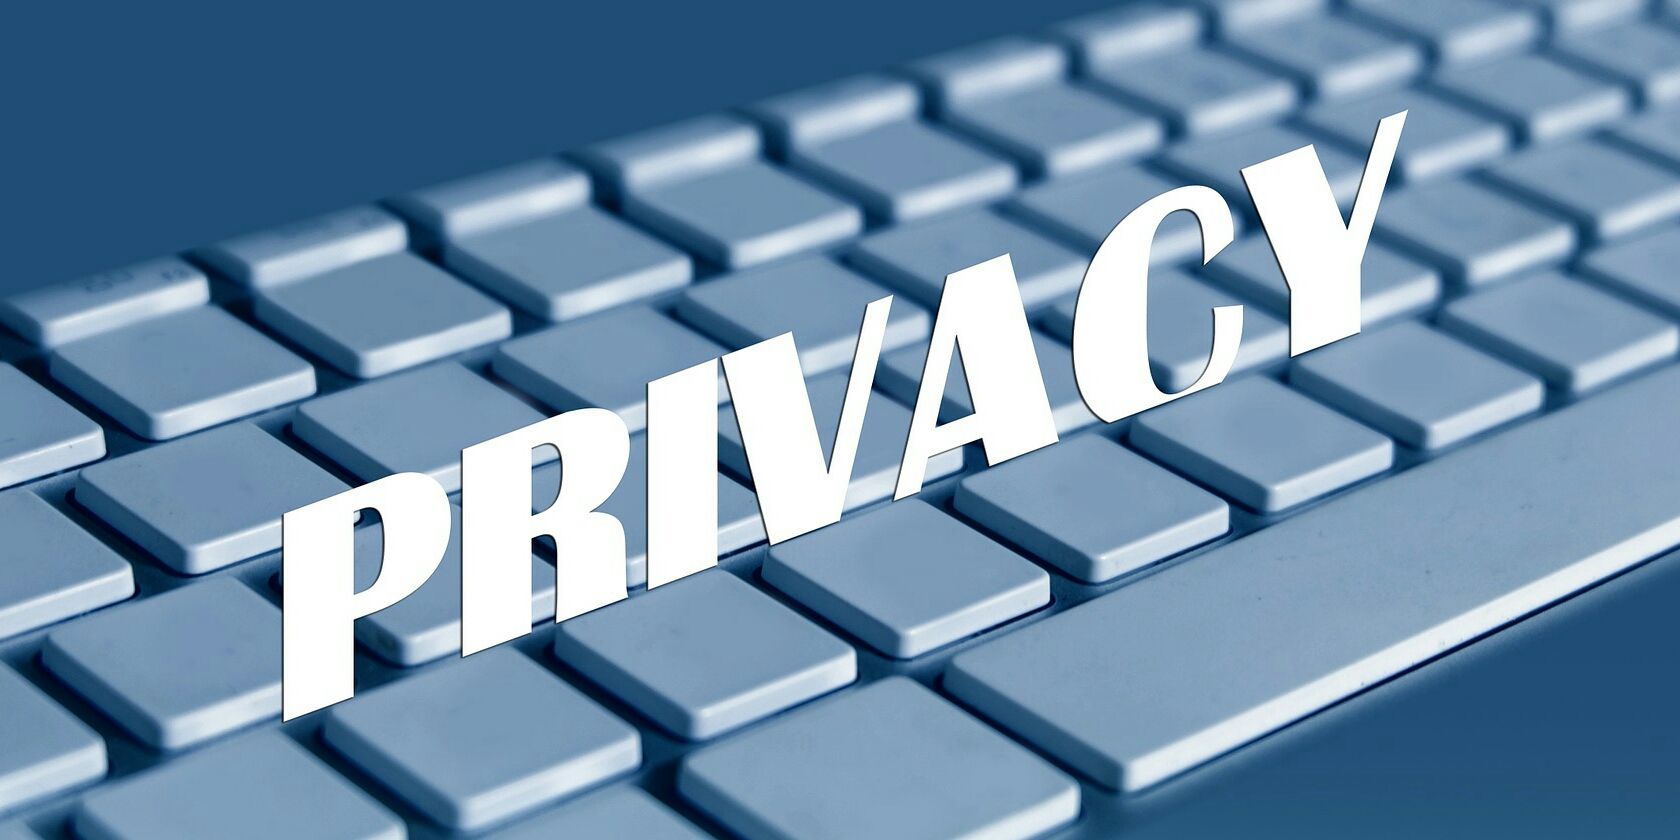 internet privacy information